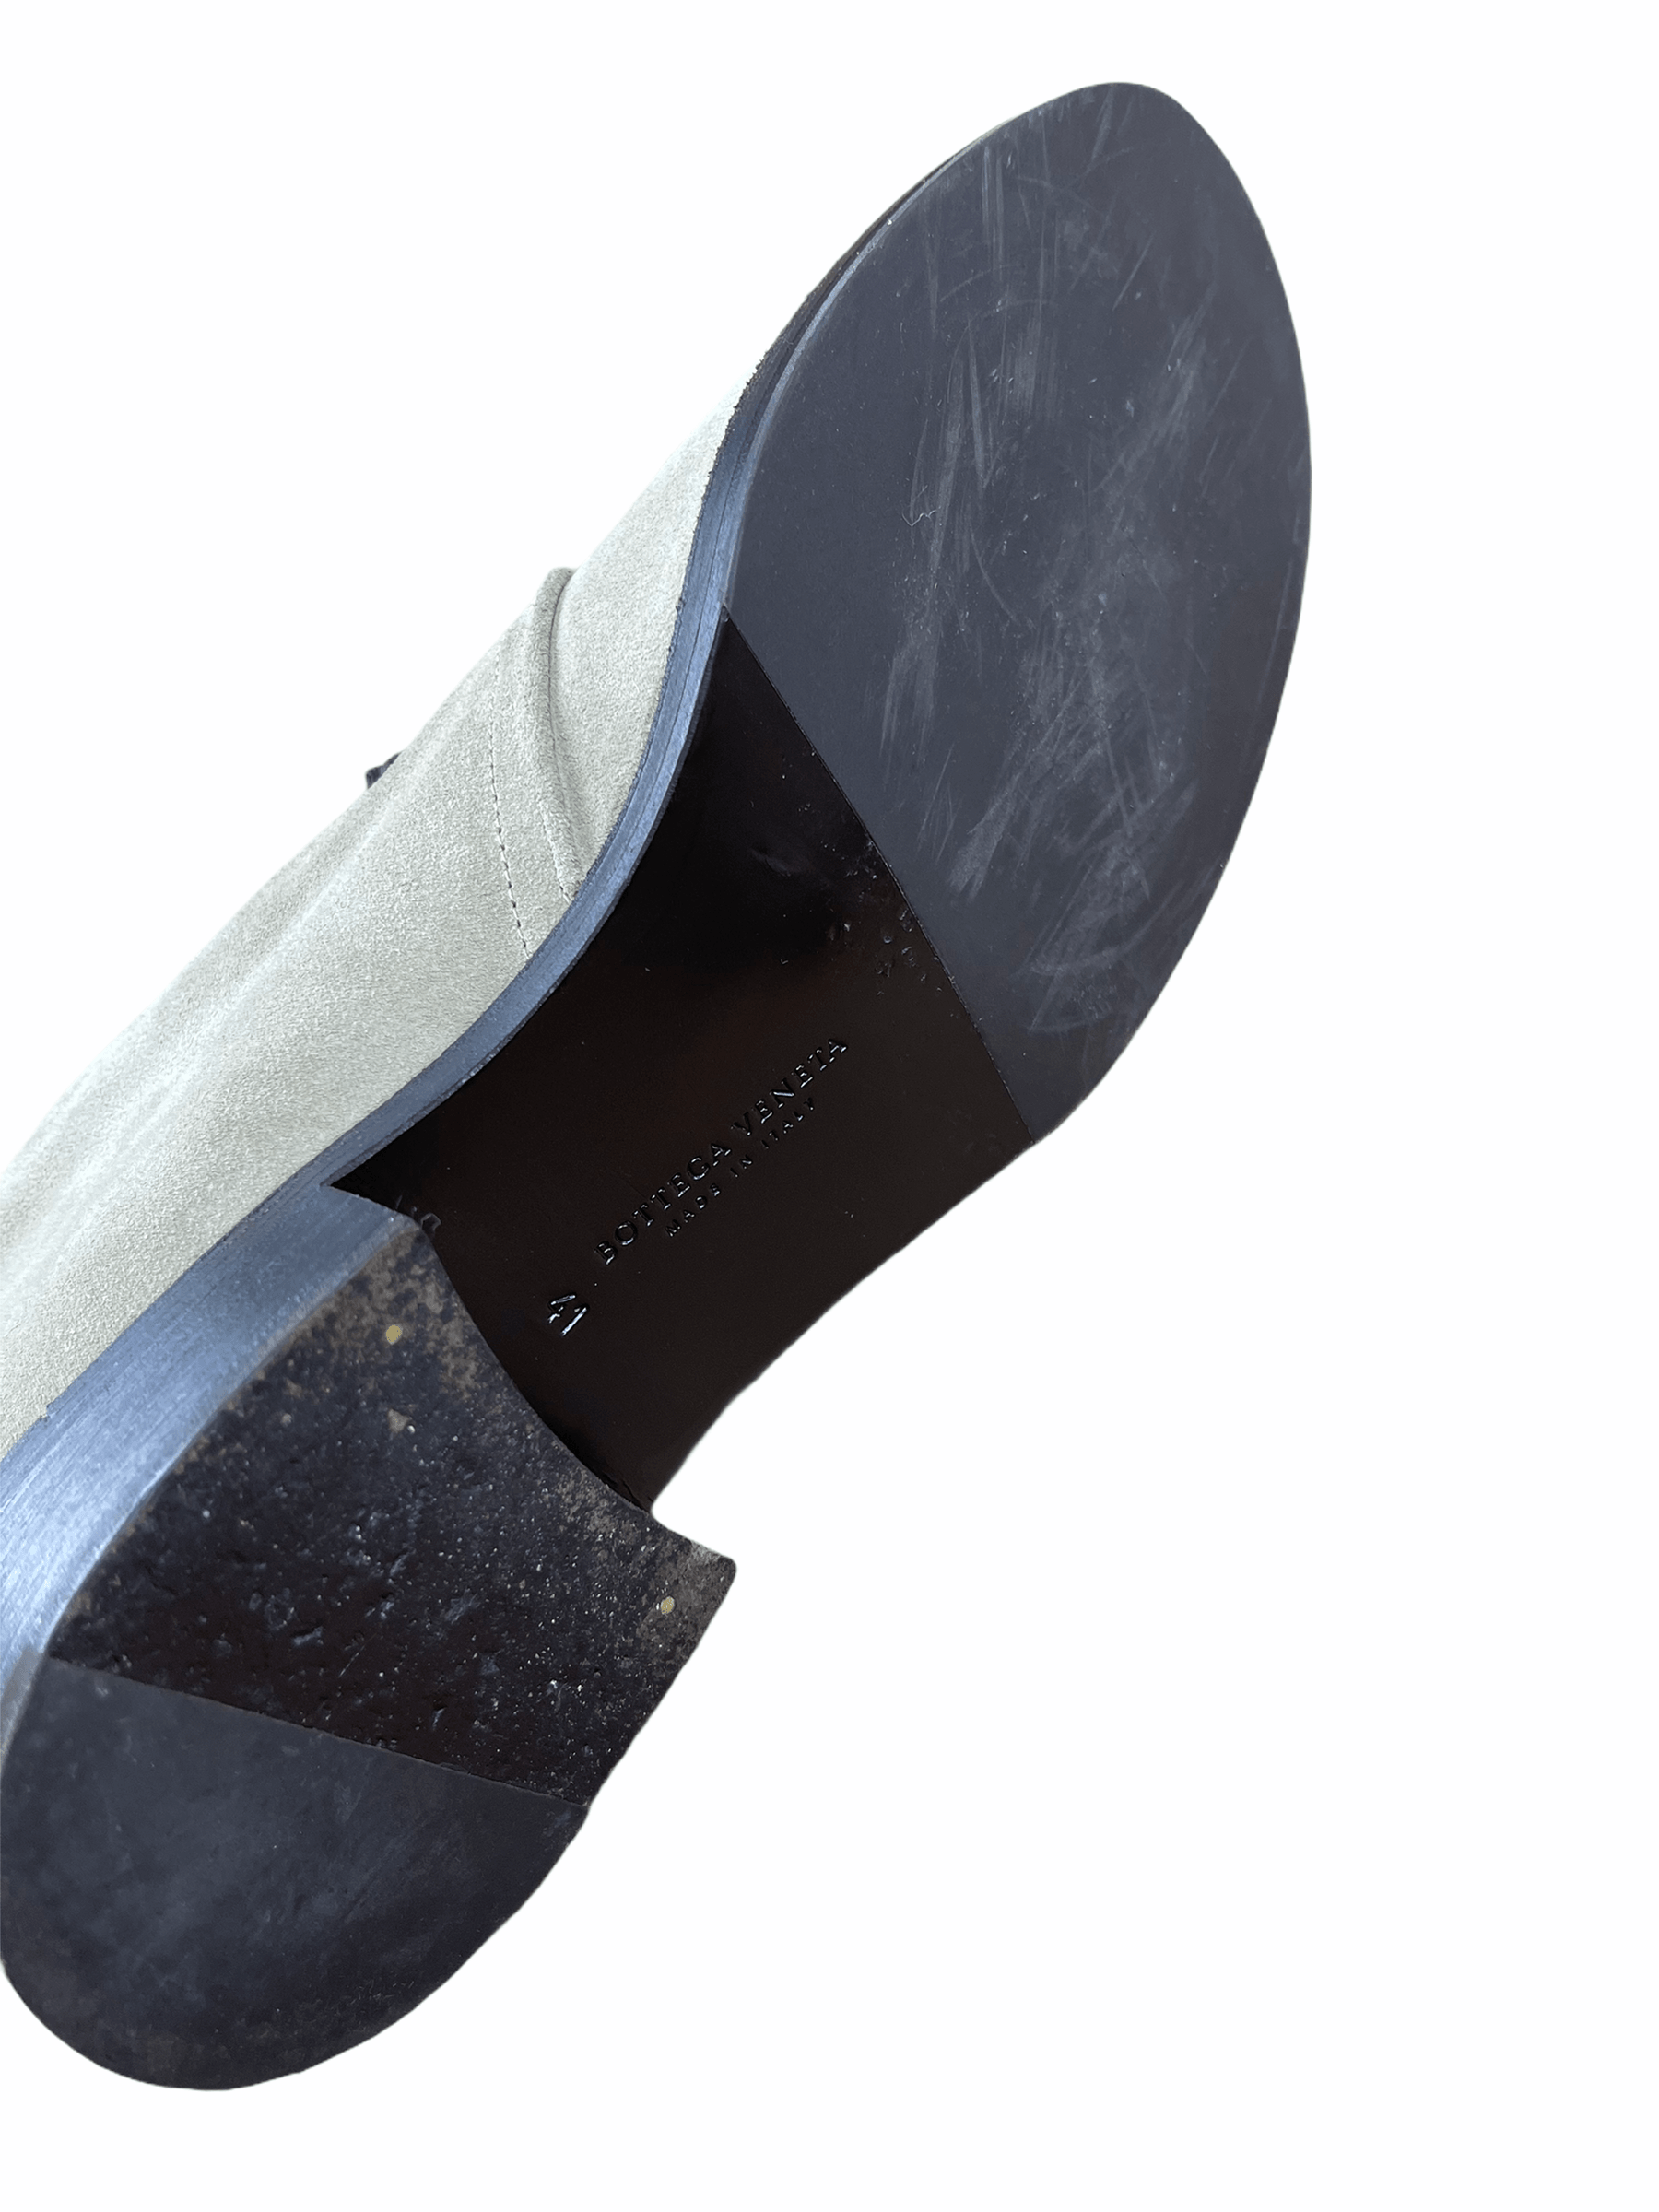 Bottega Veneta Light Tan Suede Leather Chukka Desert Boot 8US—Genuine Design luxury consignment 